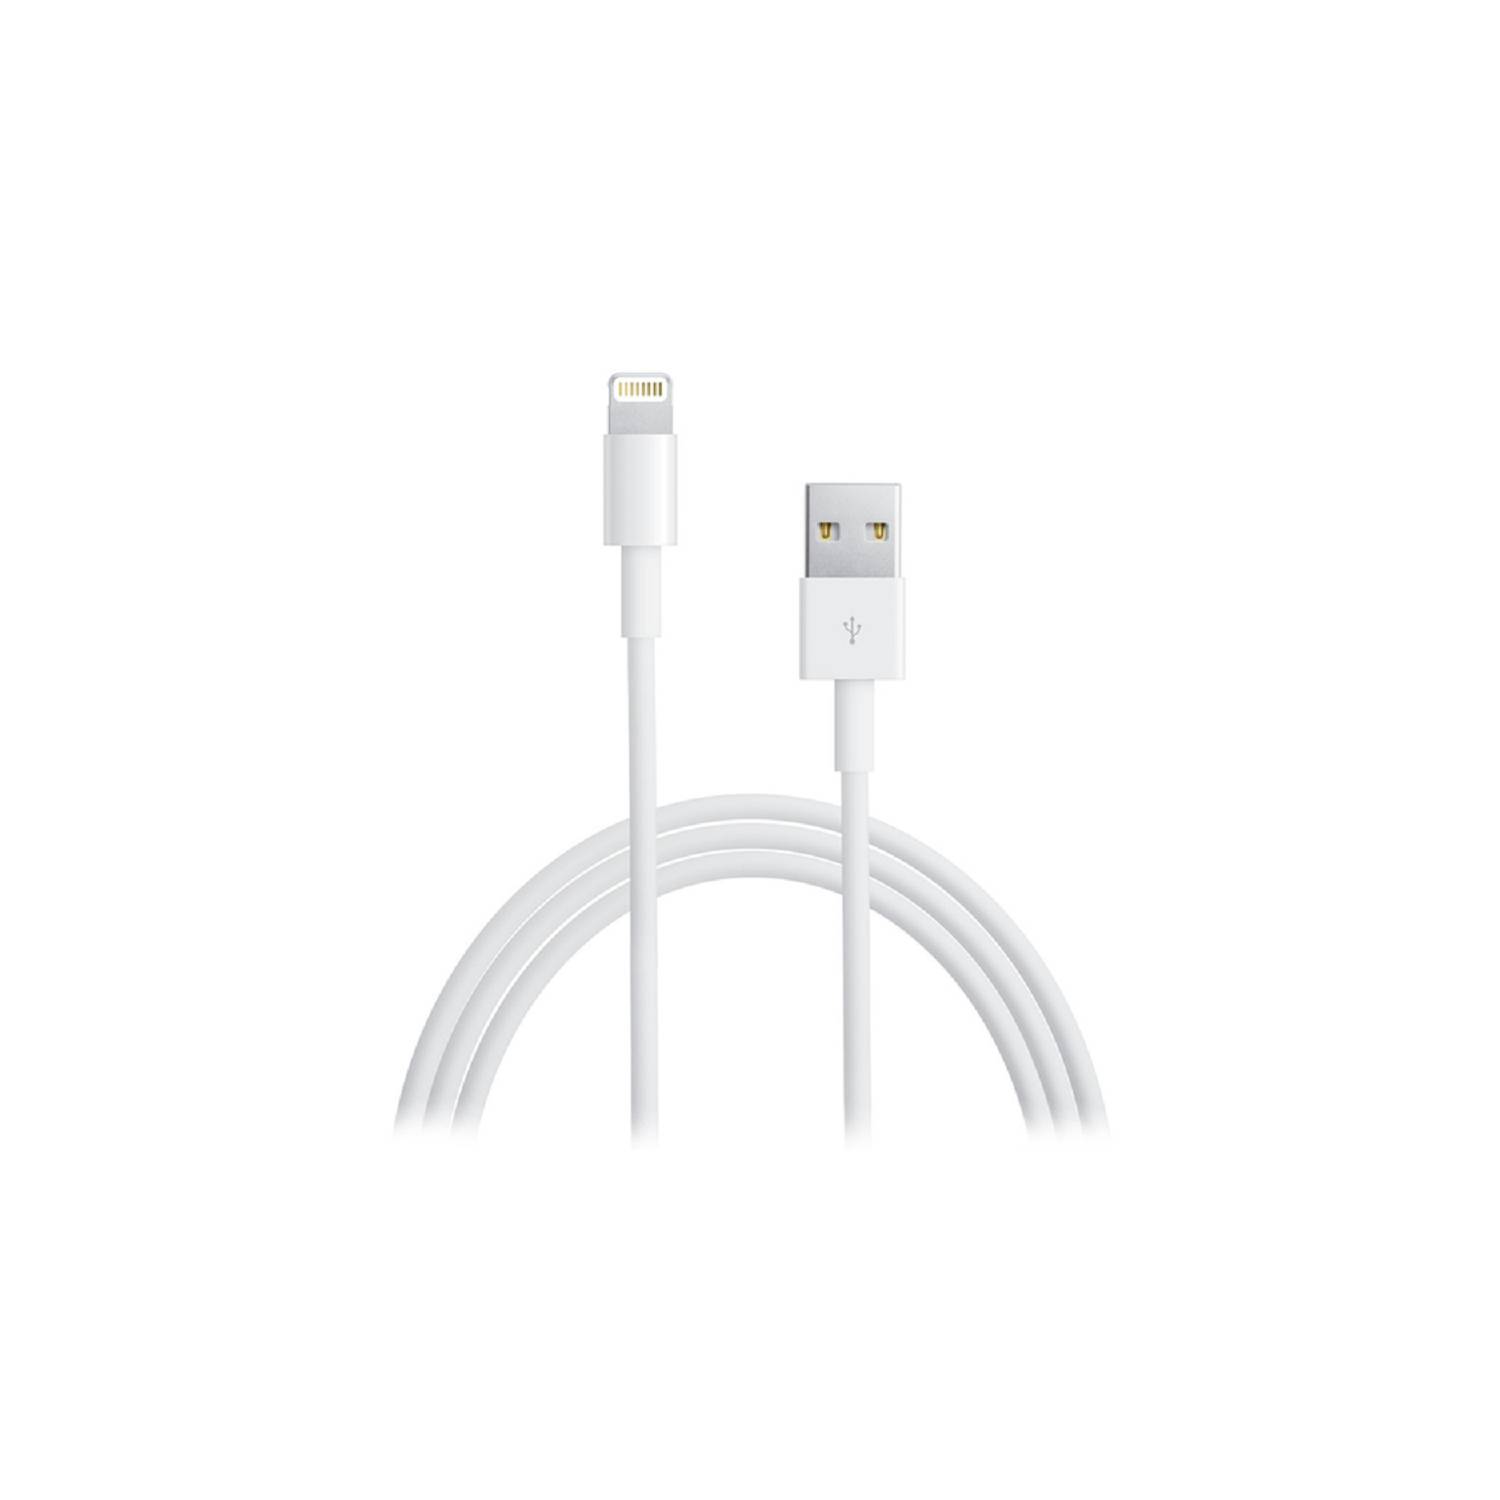 Cable Usb C A Lightning 1 Metro iPhone Certificado Apple Mfi Color Blanco